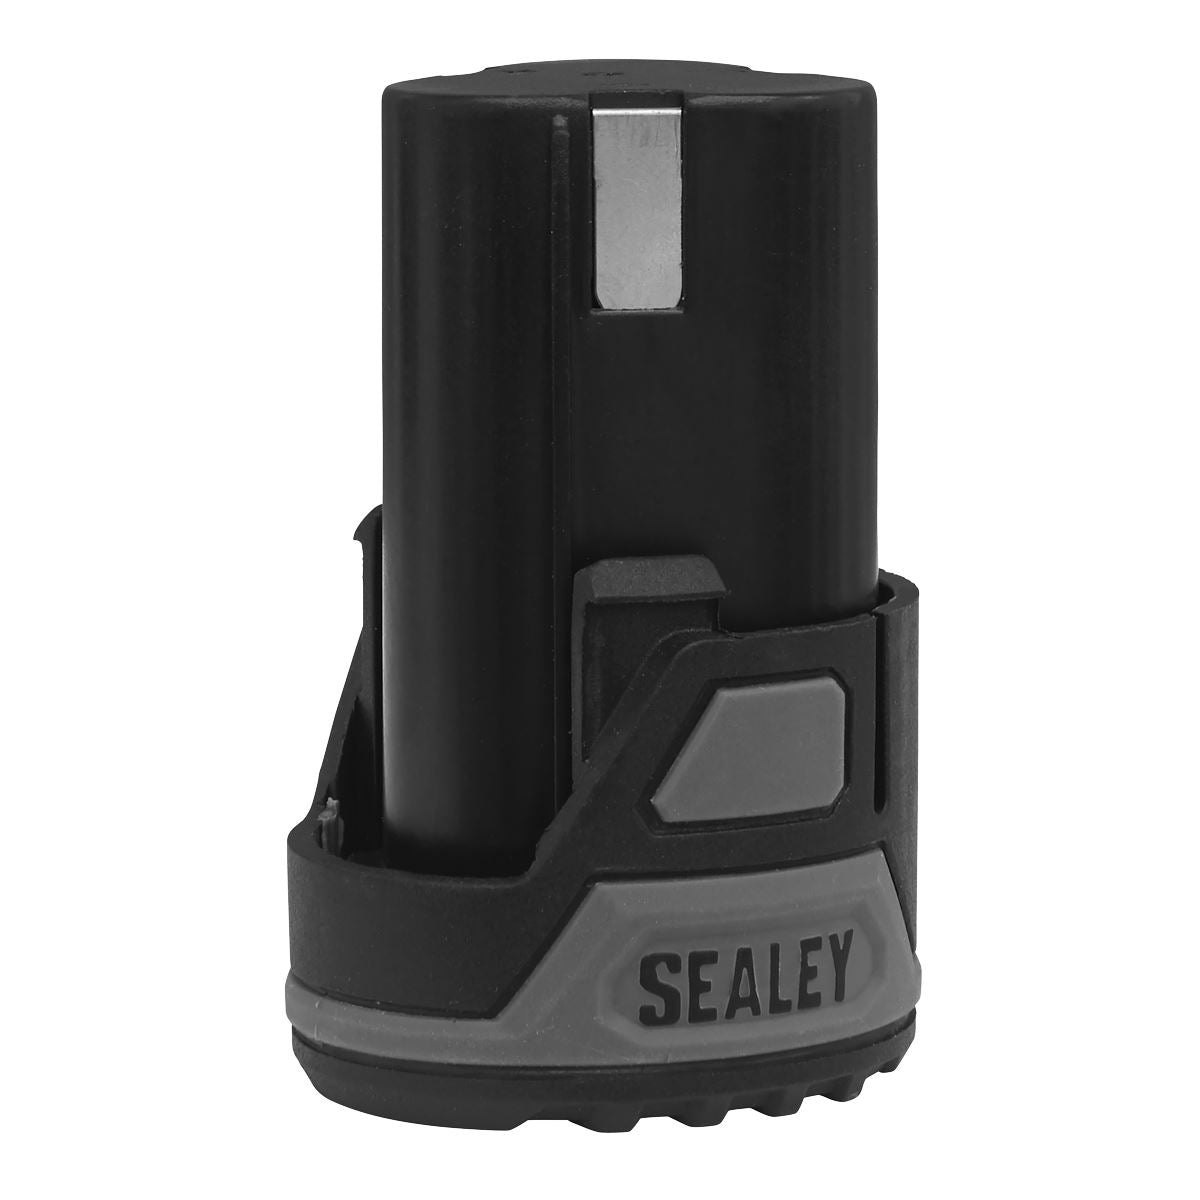 Sealey 2 x 10.8V SV10.8 Series Combi Drill & Multi-Tool Kit